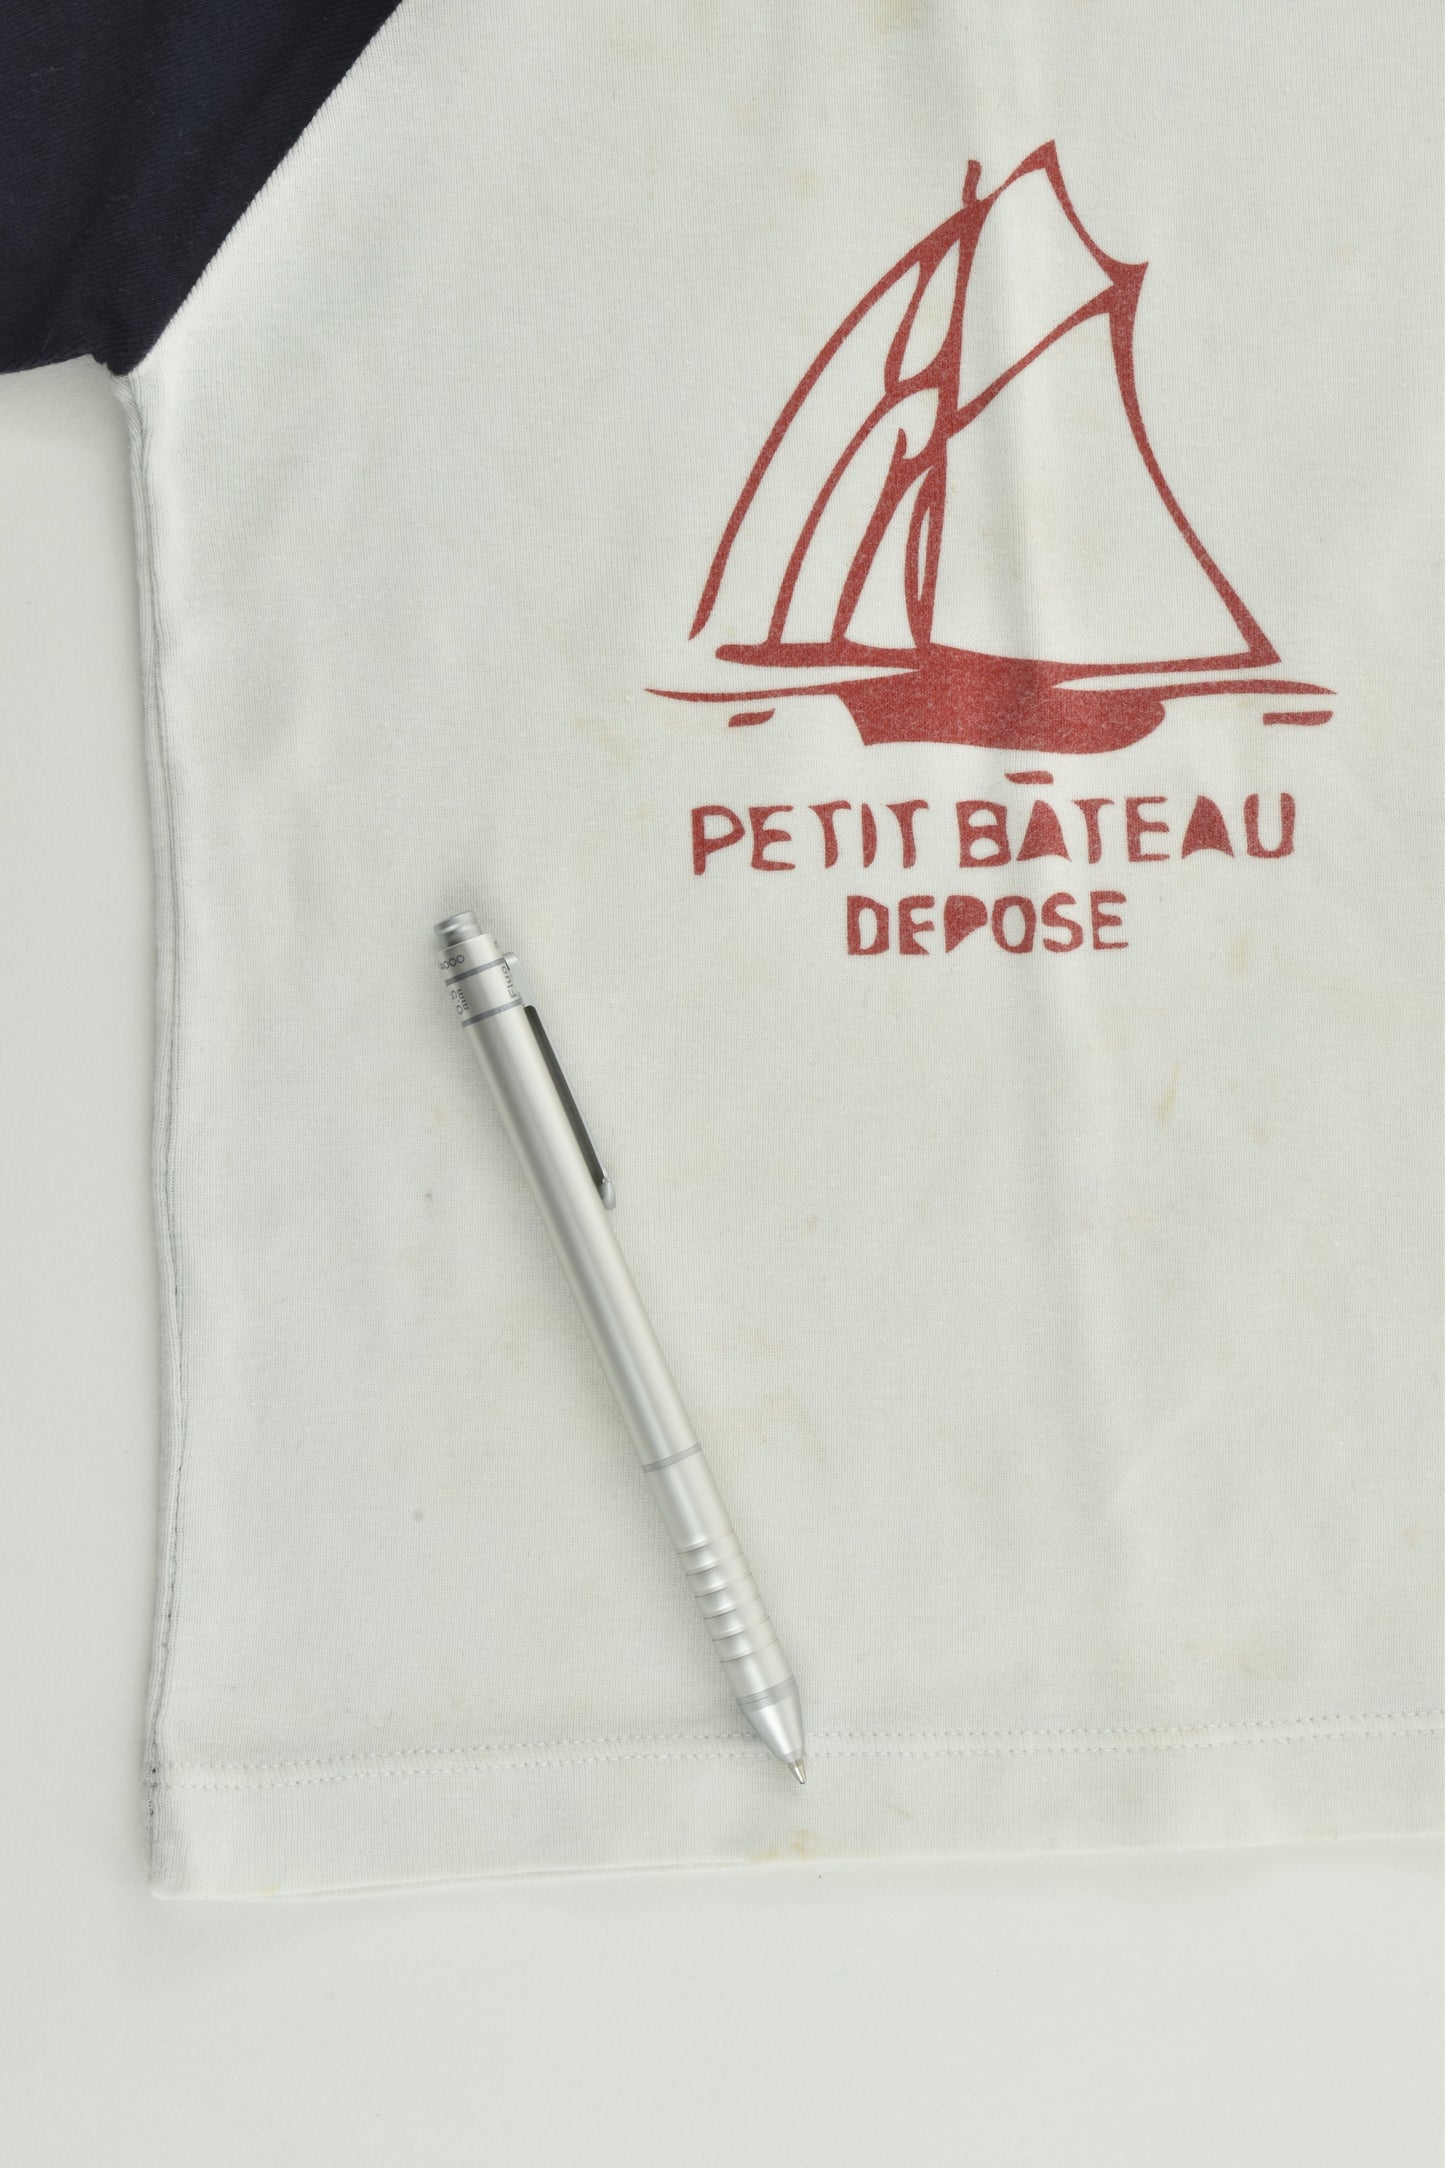 Petit Bateau (France) Size 2-3 (3 years, 94 cm) 'Petit Bateau Depose' T-shirt